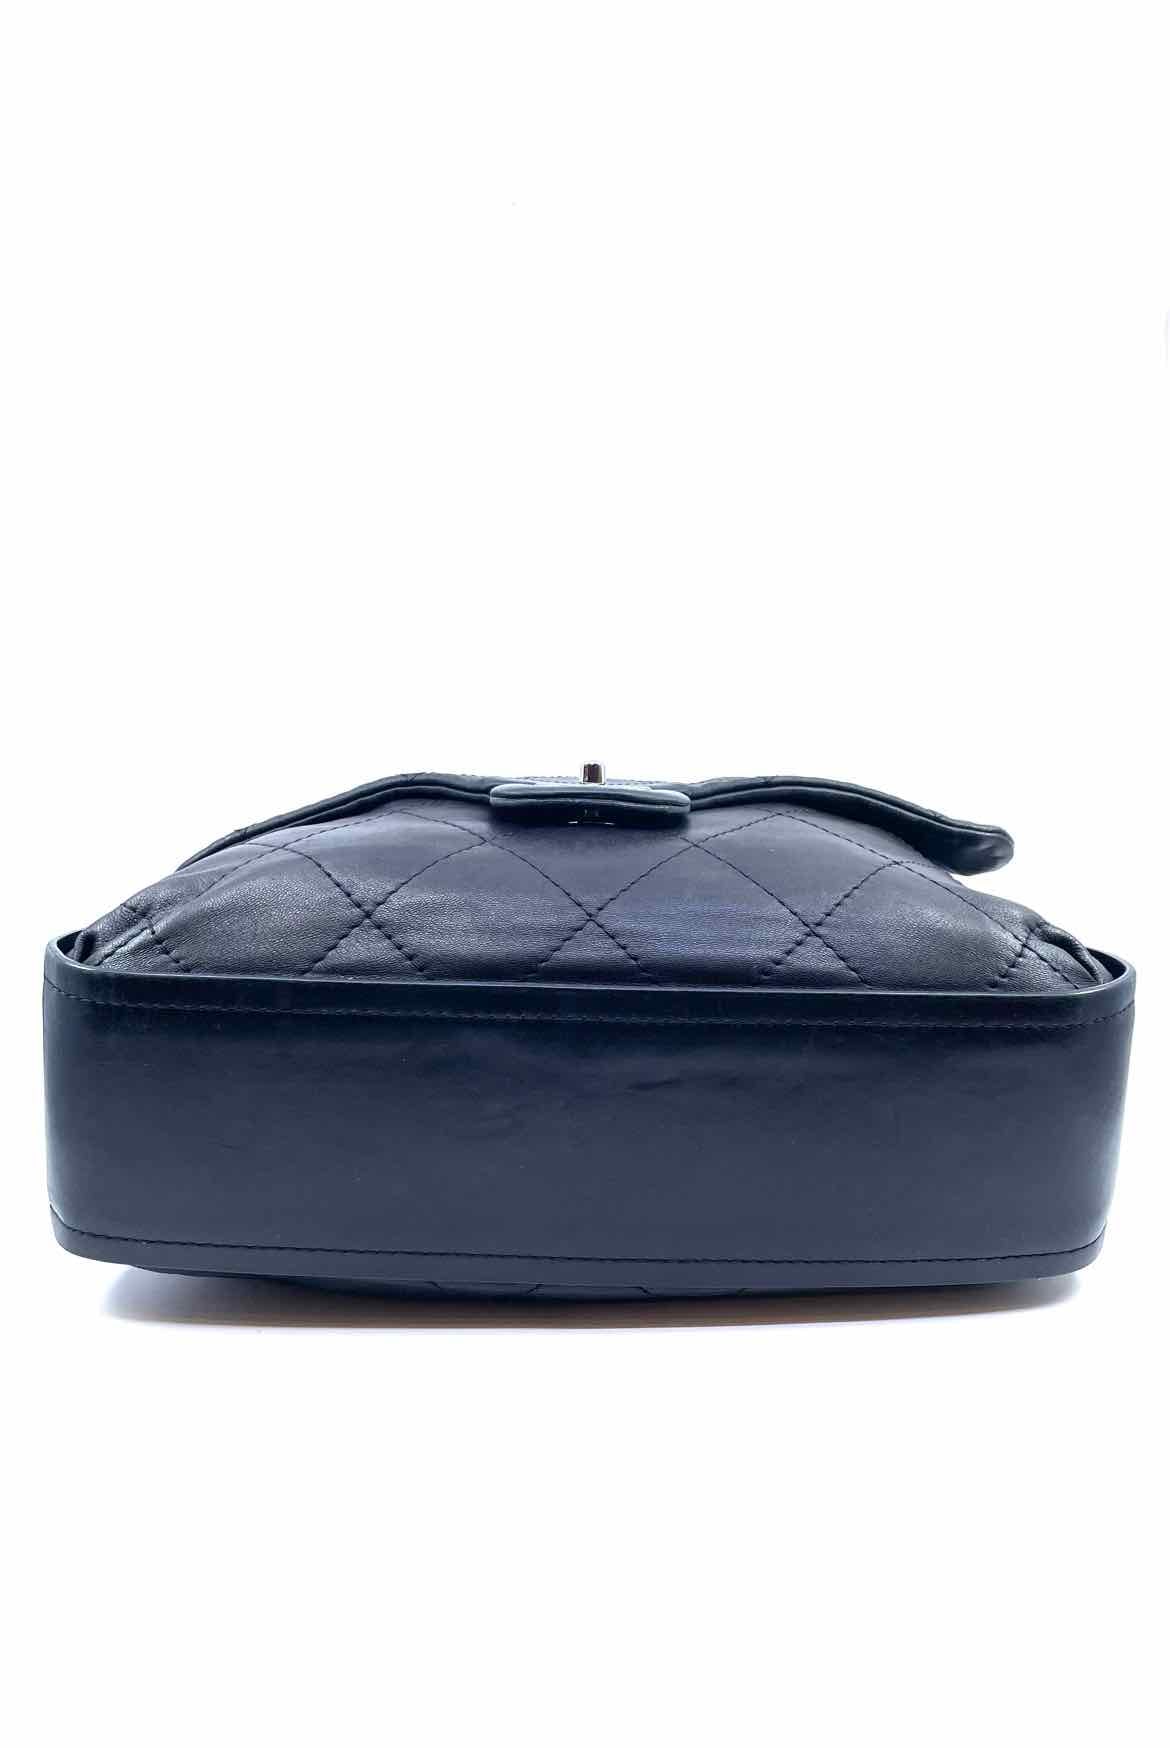 Chanel Brown Caviar Leather Shoulder Bag